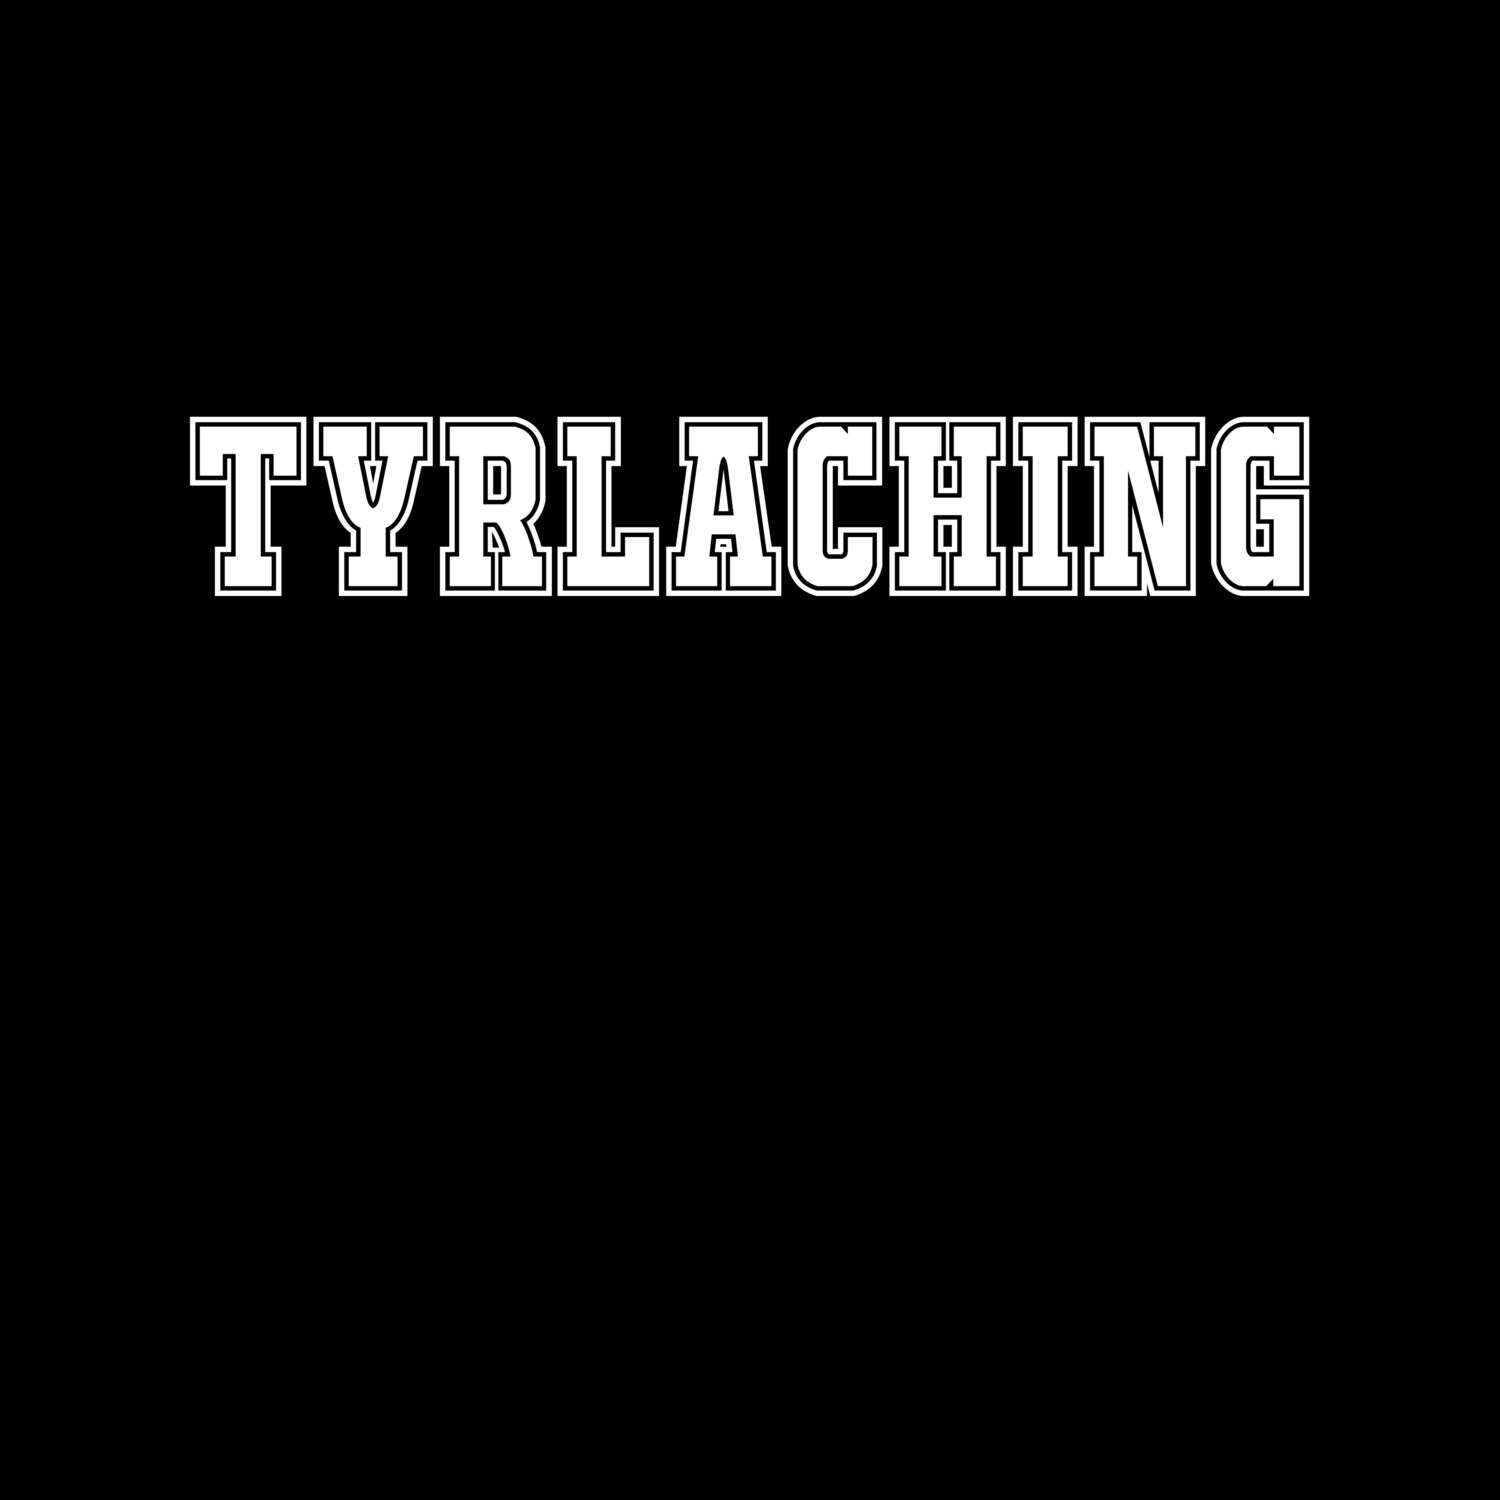 Tyrlaching T-Shirt »Classic«